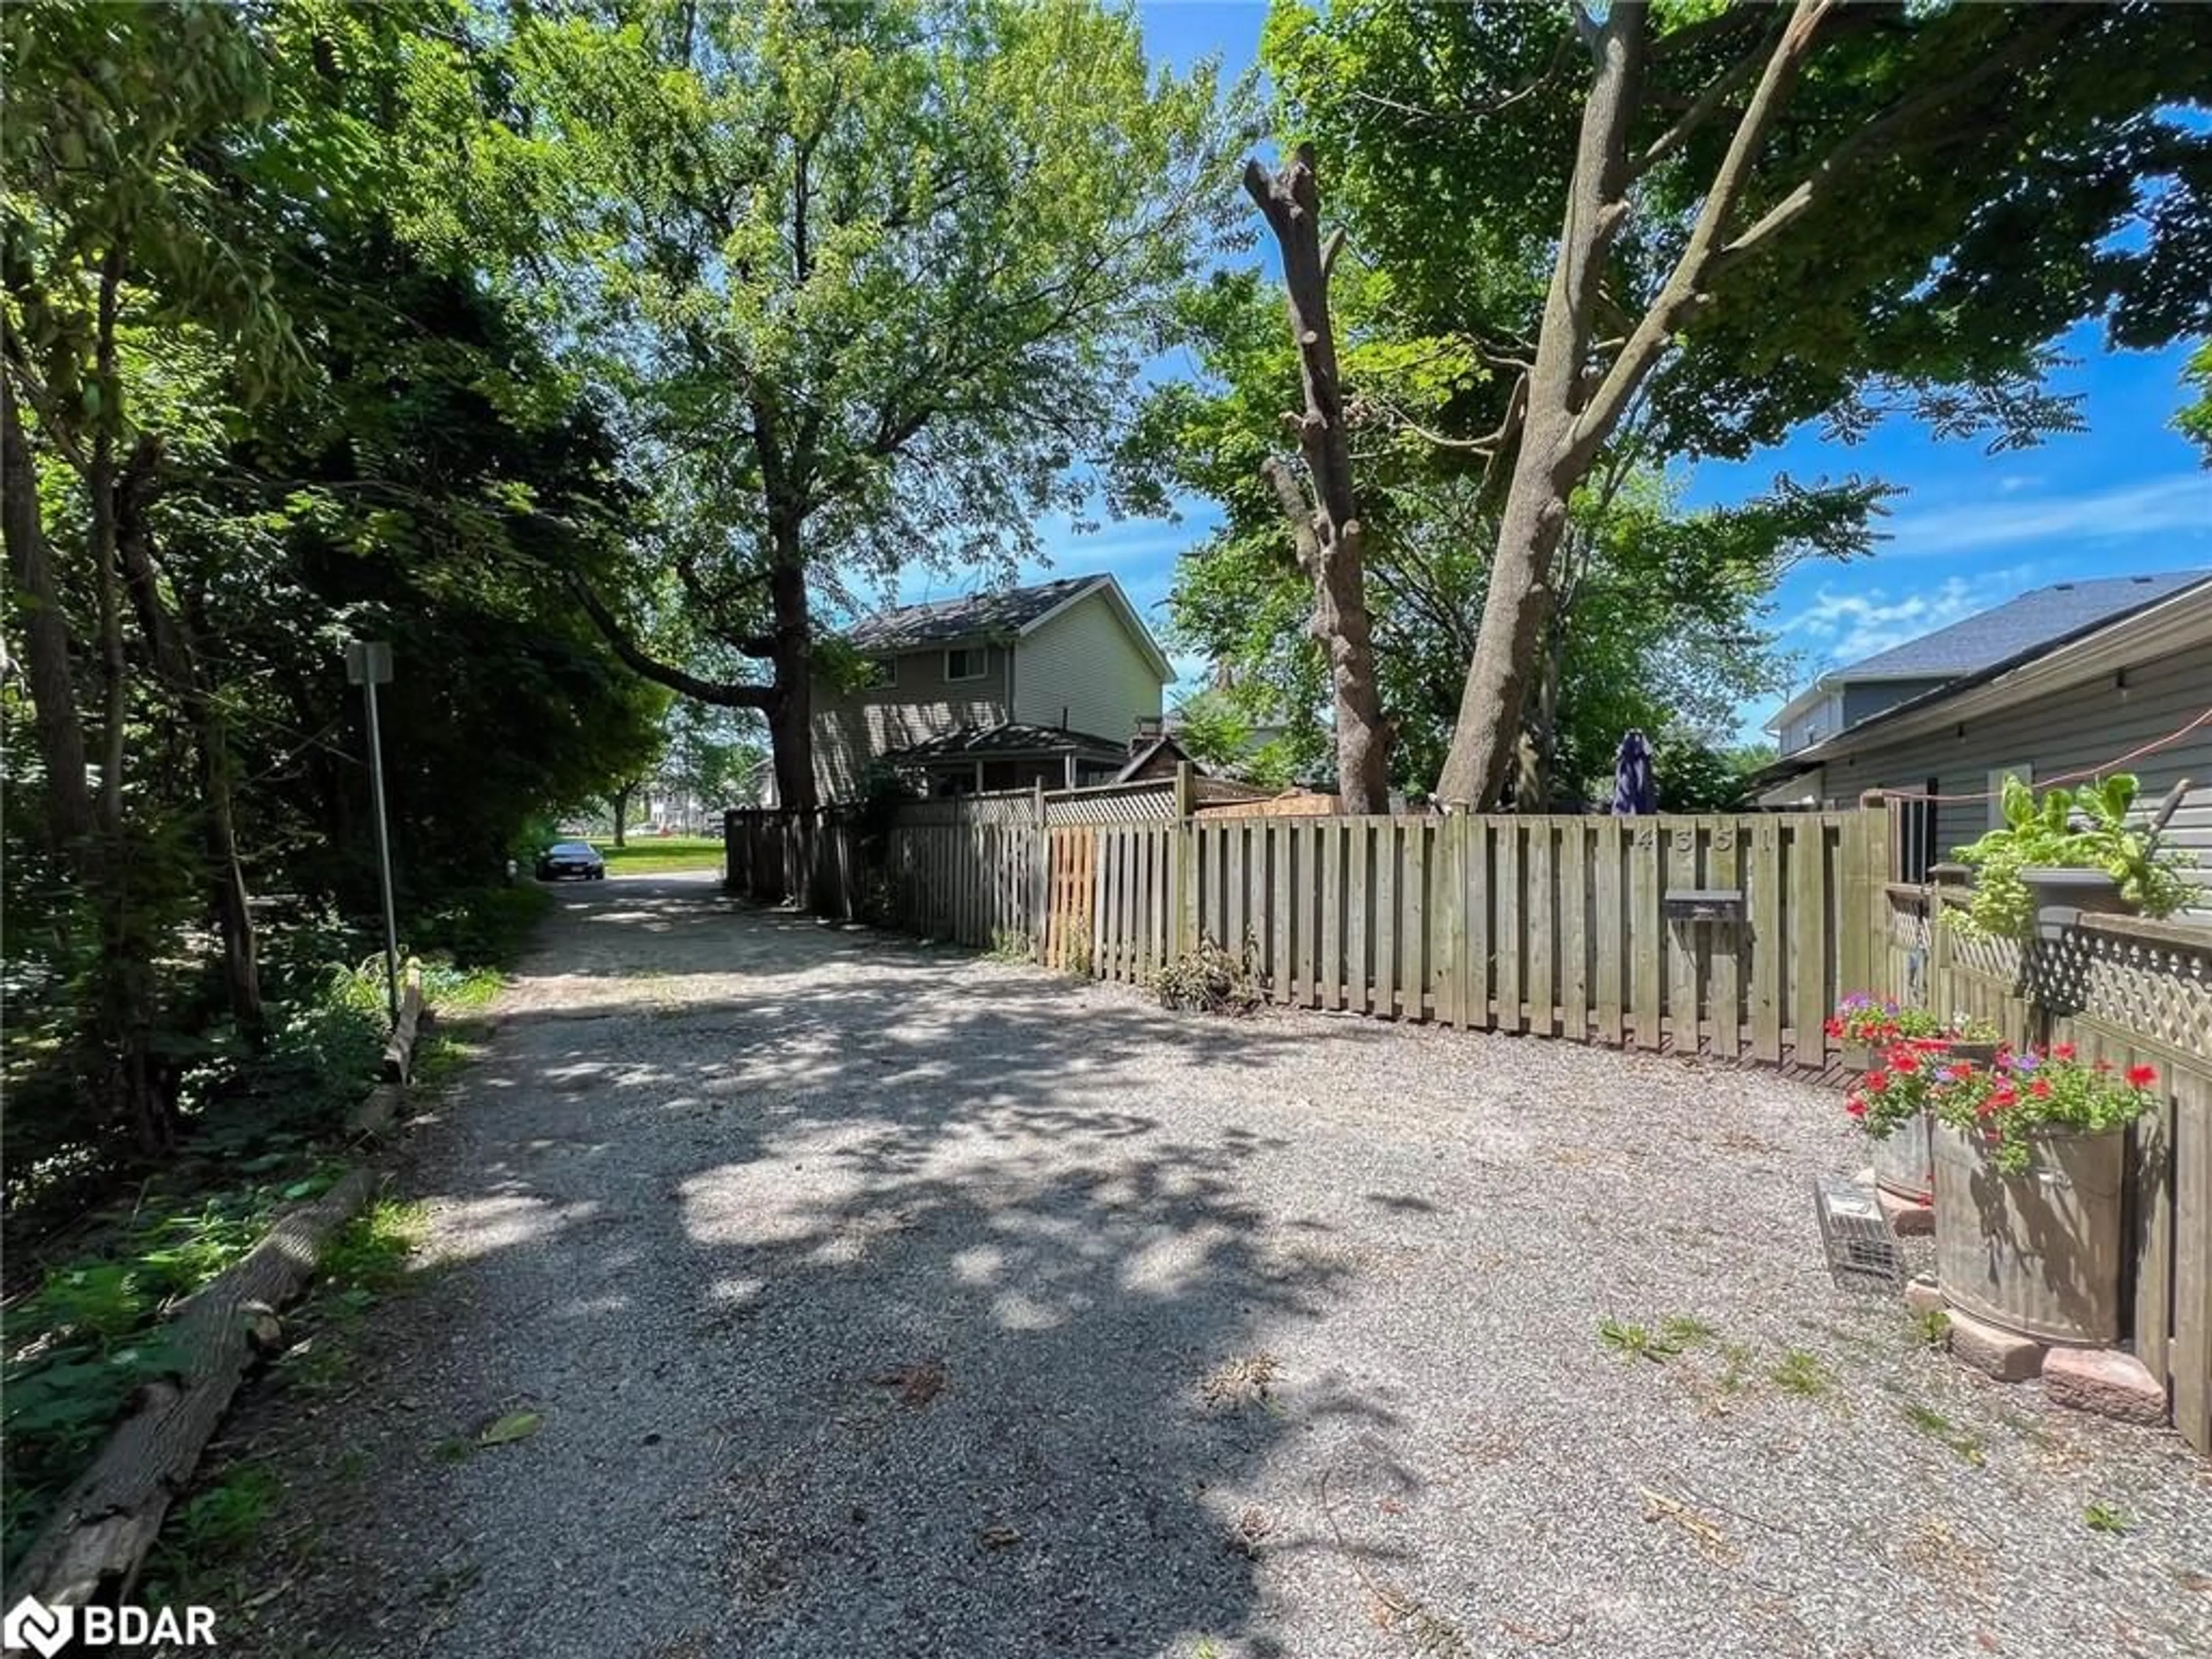 Fenced yard for 4351 Burch Pl, Niagara Falls Ontario L2E 3P2